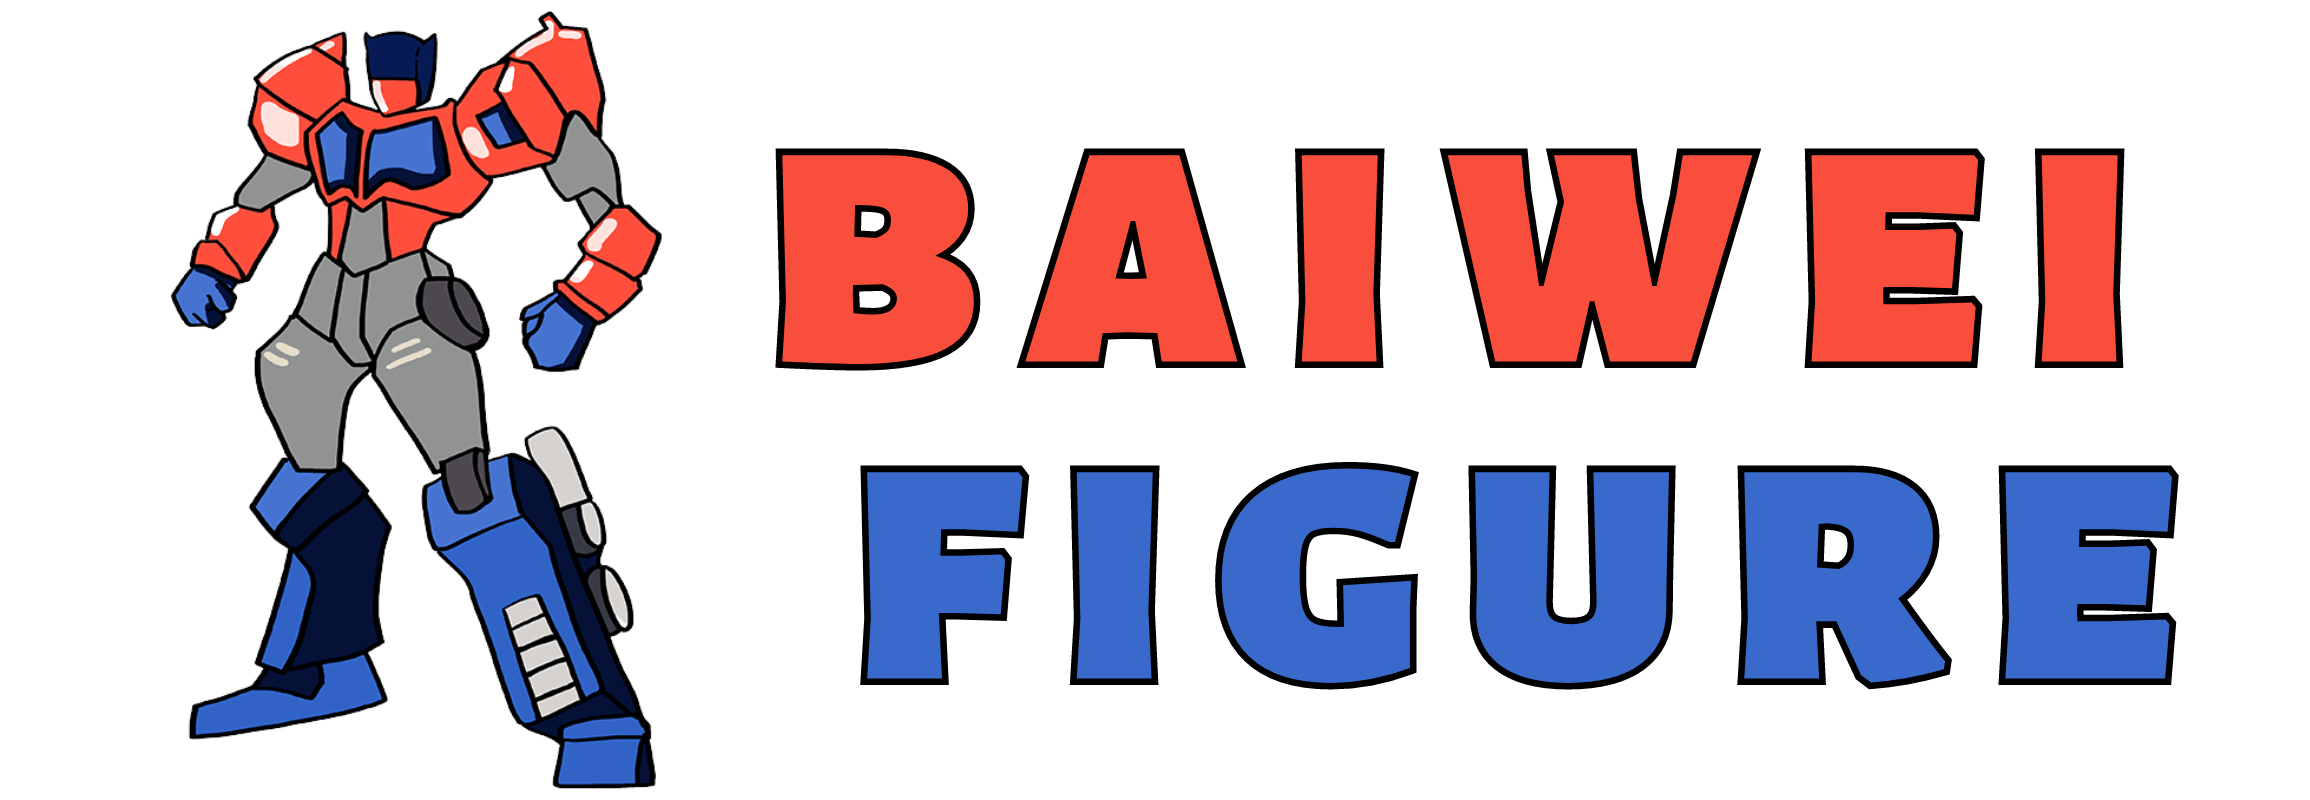 Baiwei Figure